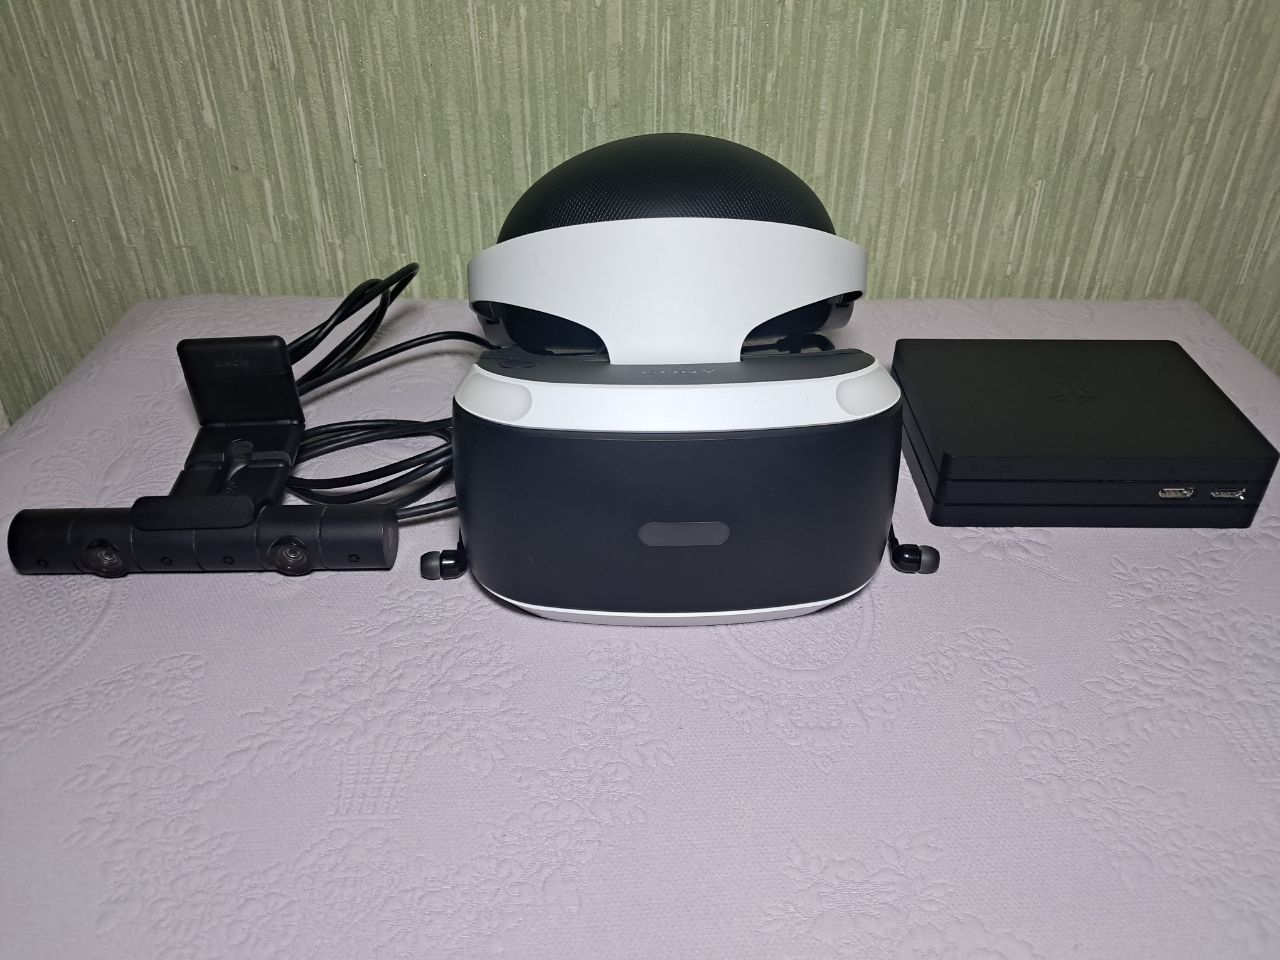 VR Sony PlayStation 4 віртуальна реальність